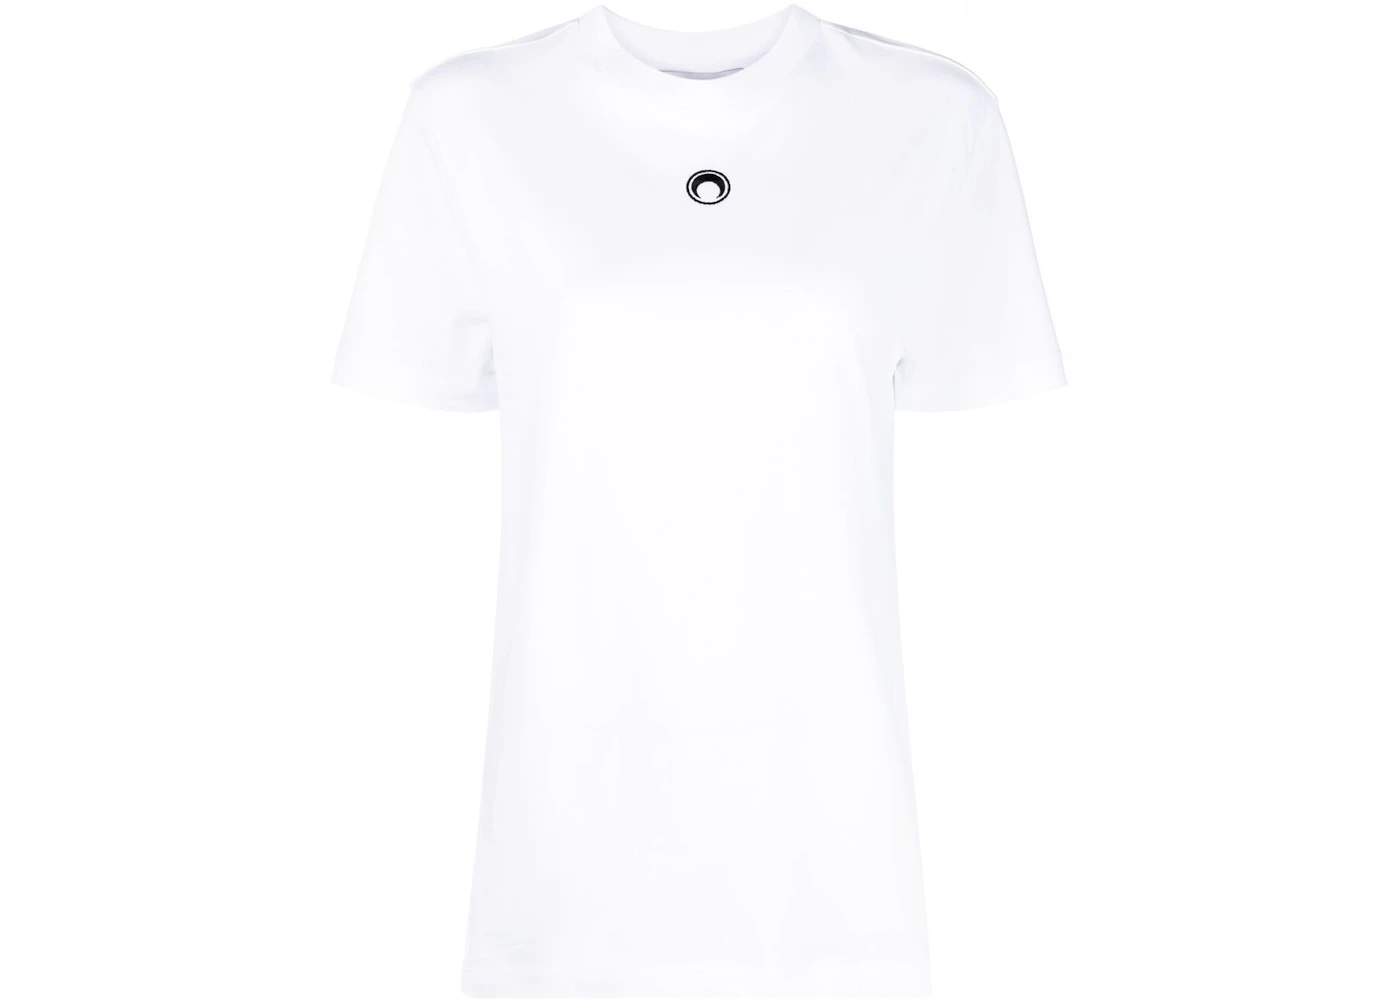 Marine Serre Organic Cotton Embroidered T-shirt White - US